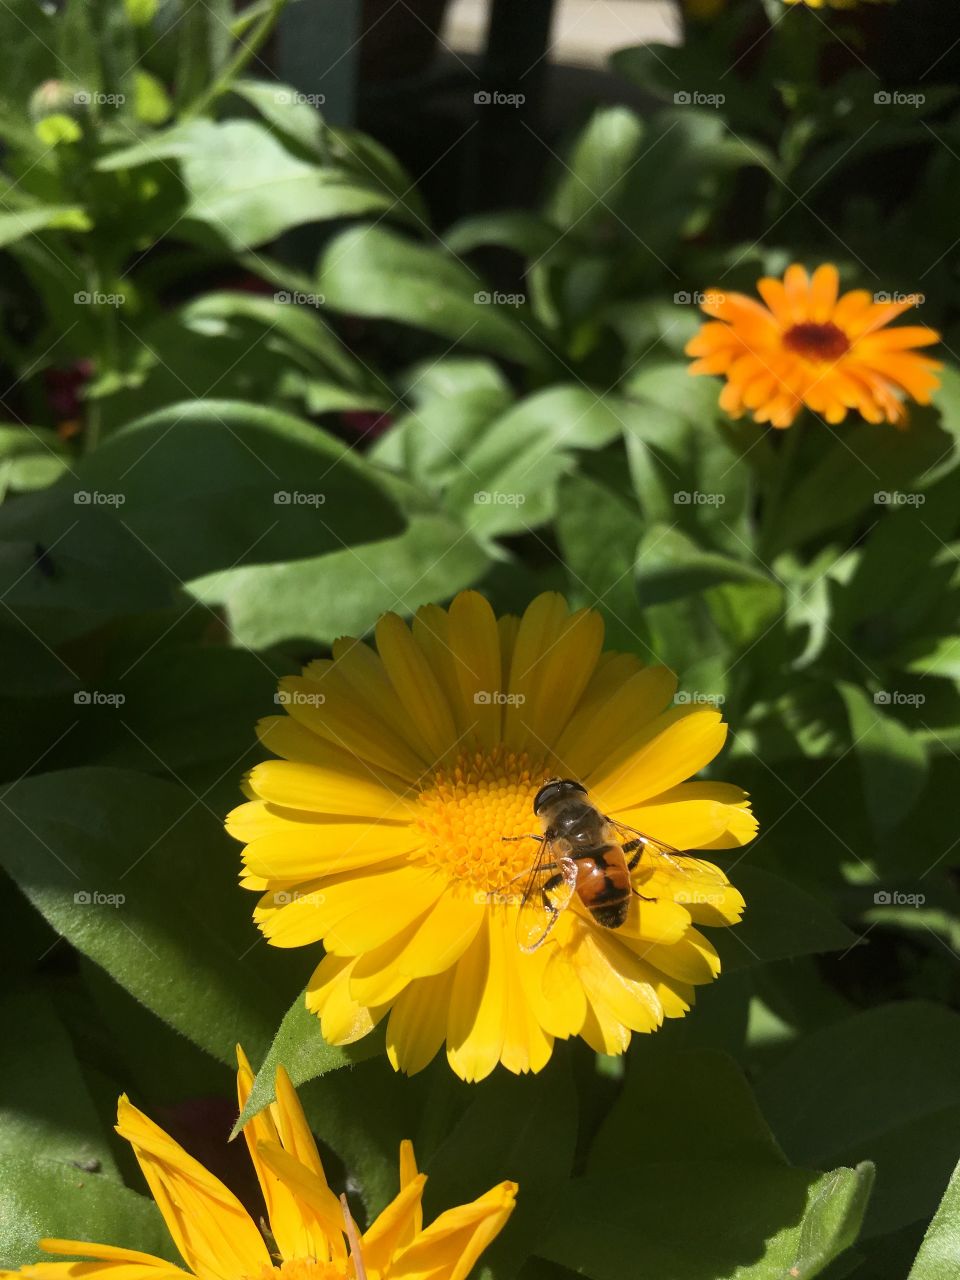 Flower bees 